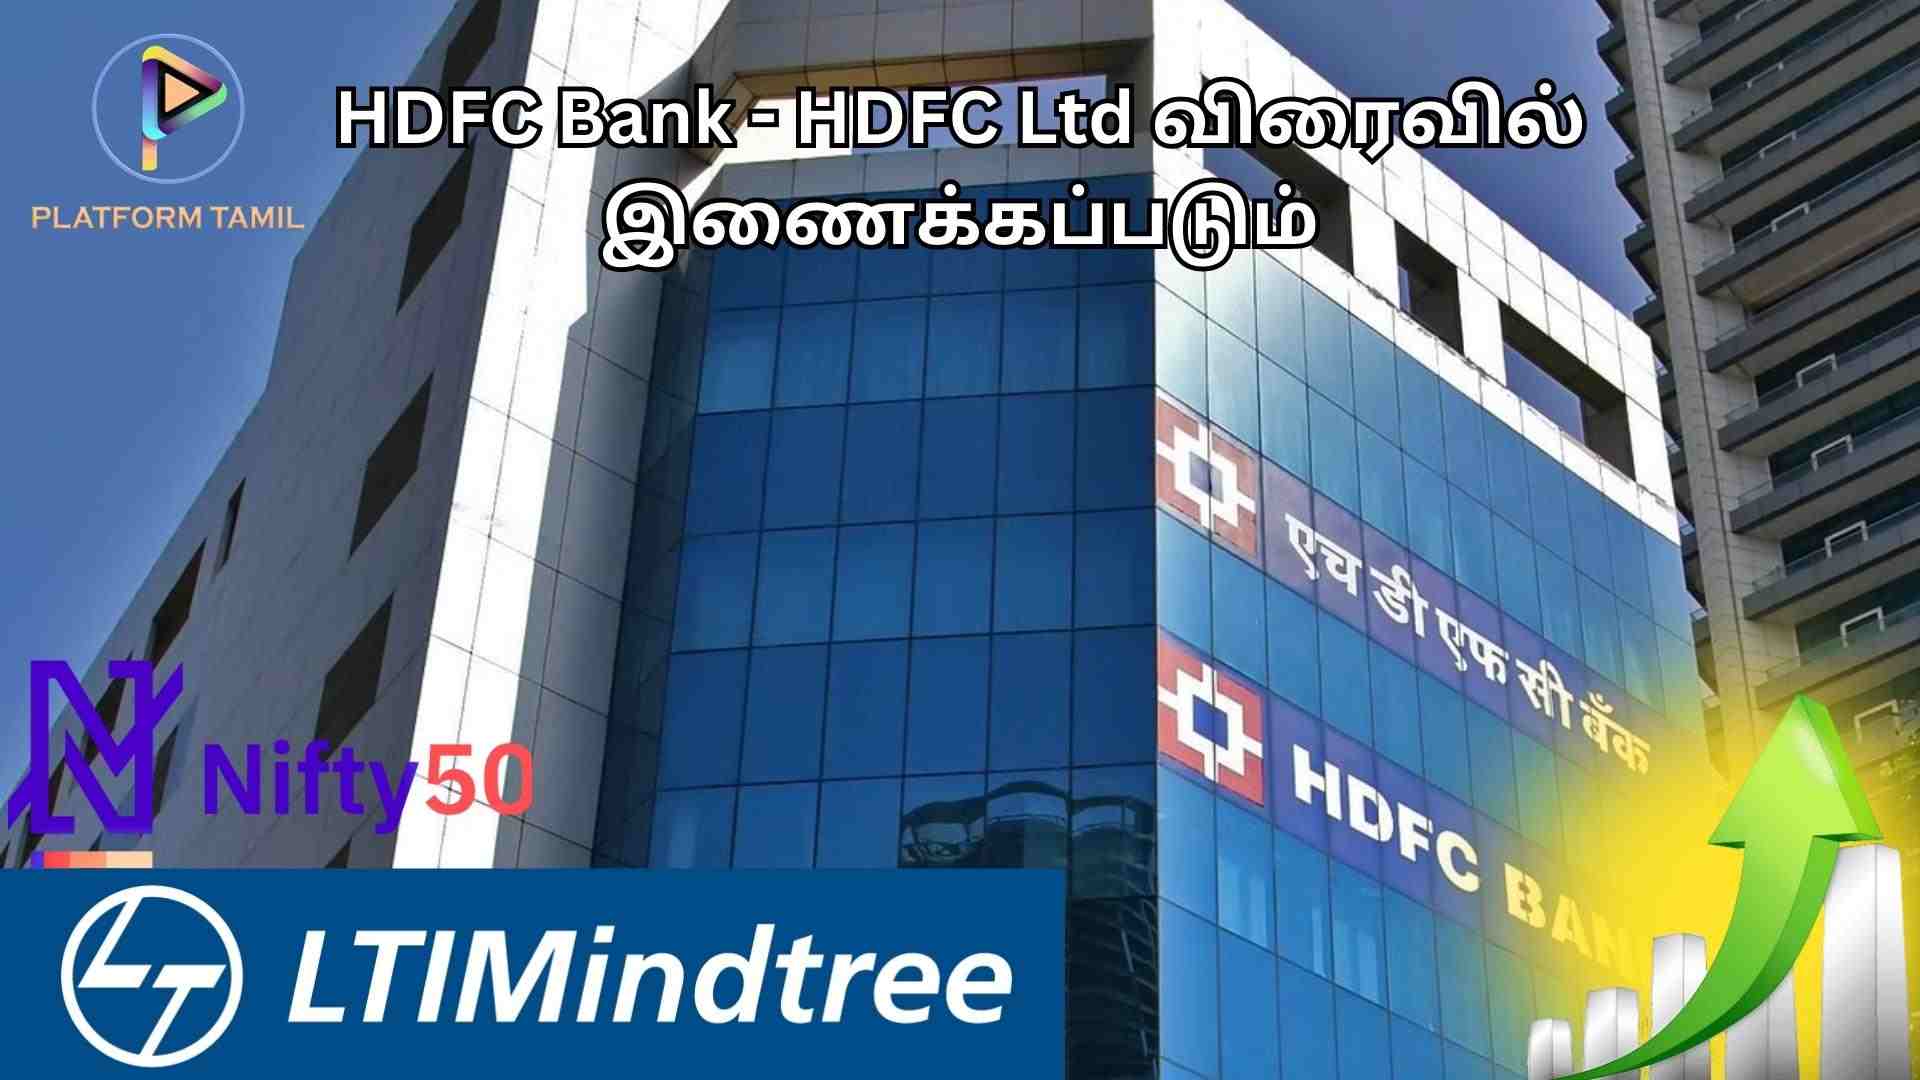 LTIMindtree Stocks Rises - Platform Tamil